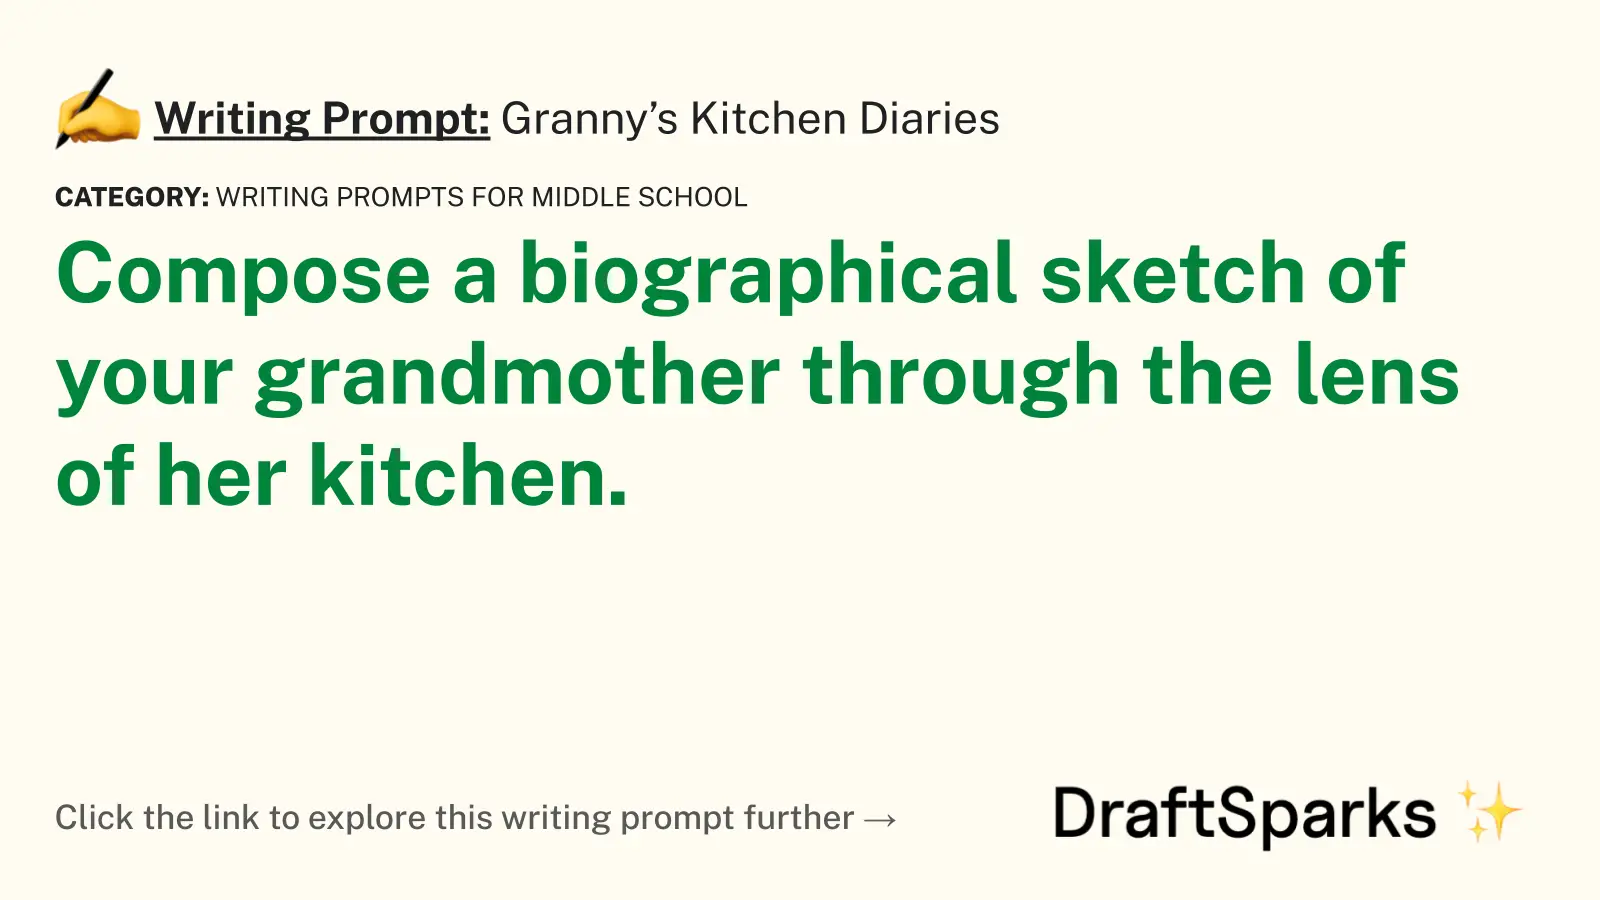 Granny’s Kitchen Diaries